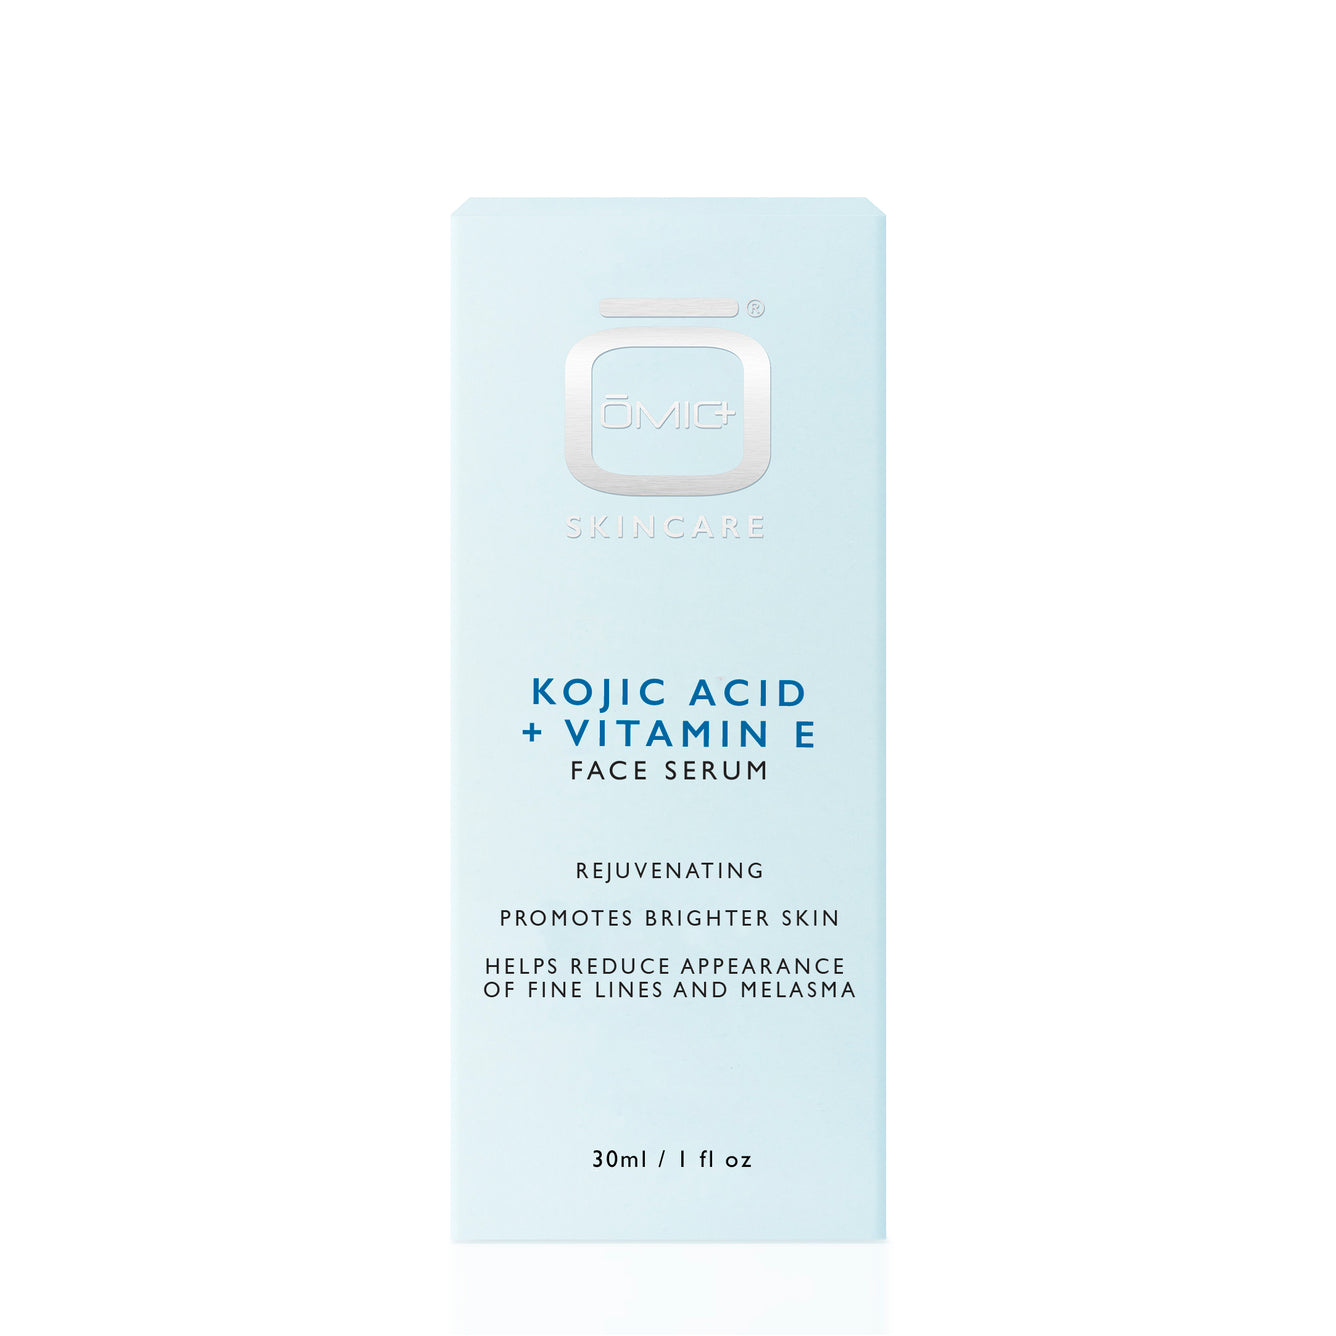 Omic+ Kojic Acid & Vitamin E Serum 30ml Mitchell Brands - Mitchell Brands - Skin Lightening, Skin Brightening, Fade Dark Spots, Shea Butter, Hair Growth Products